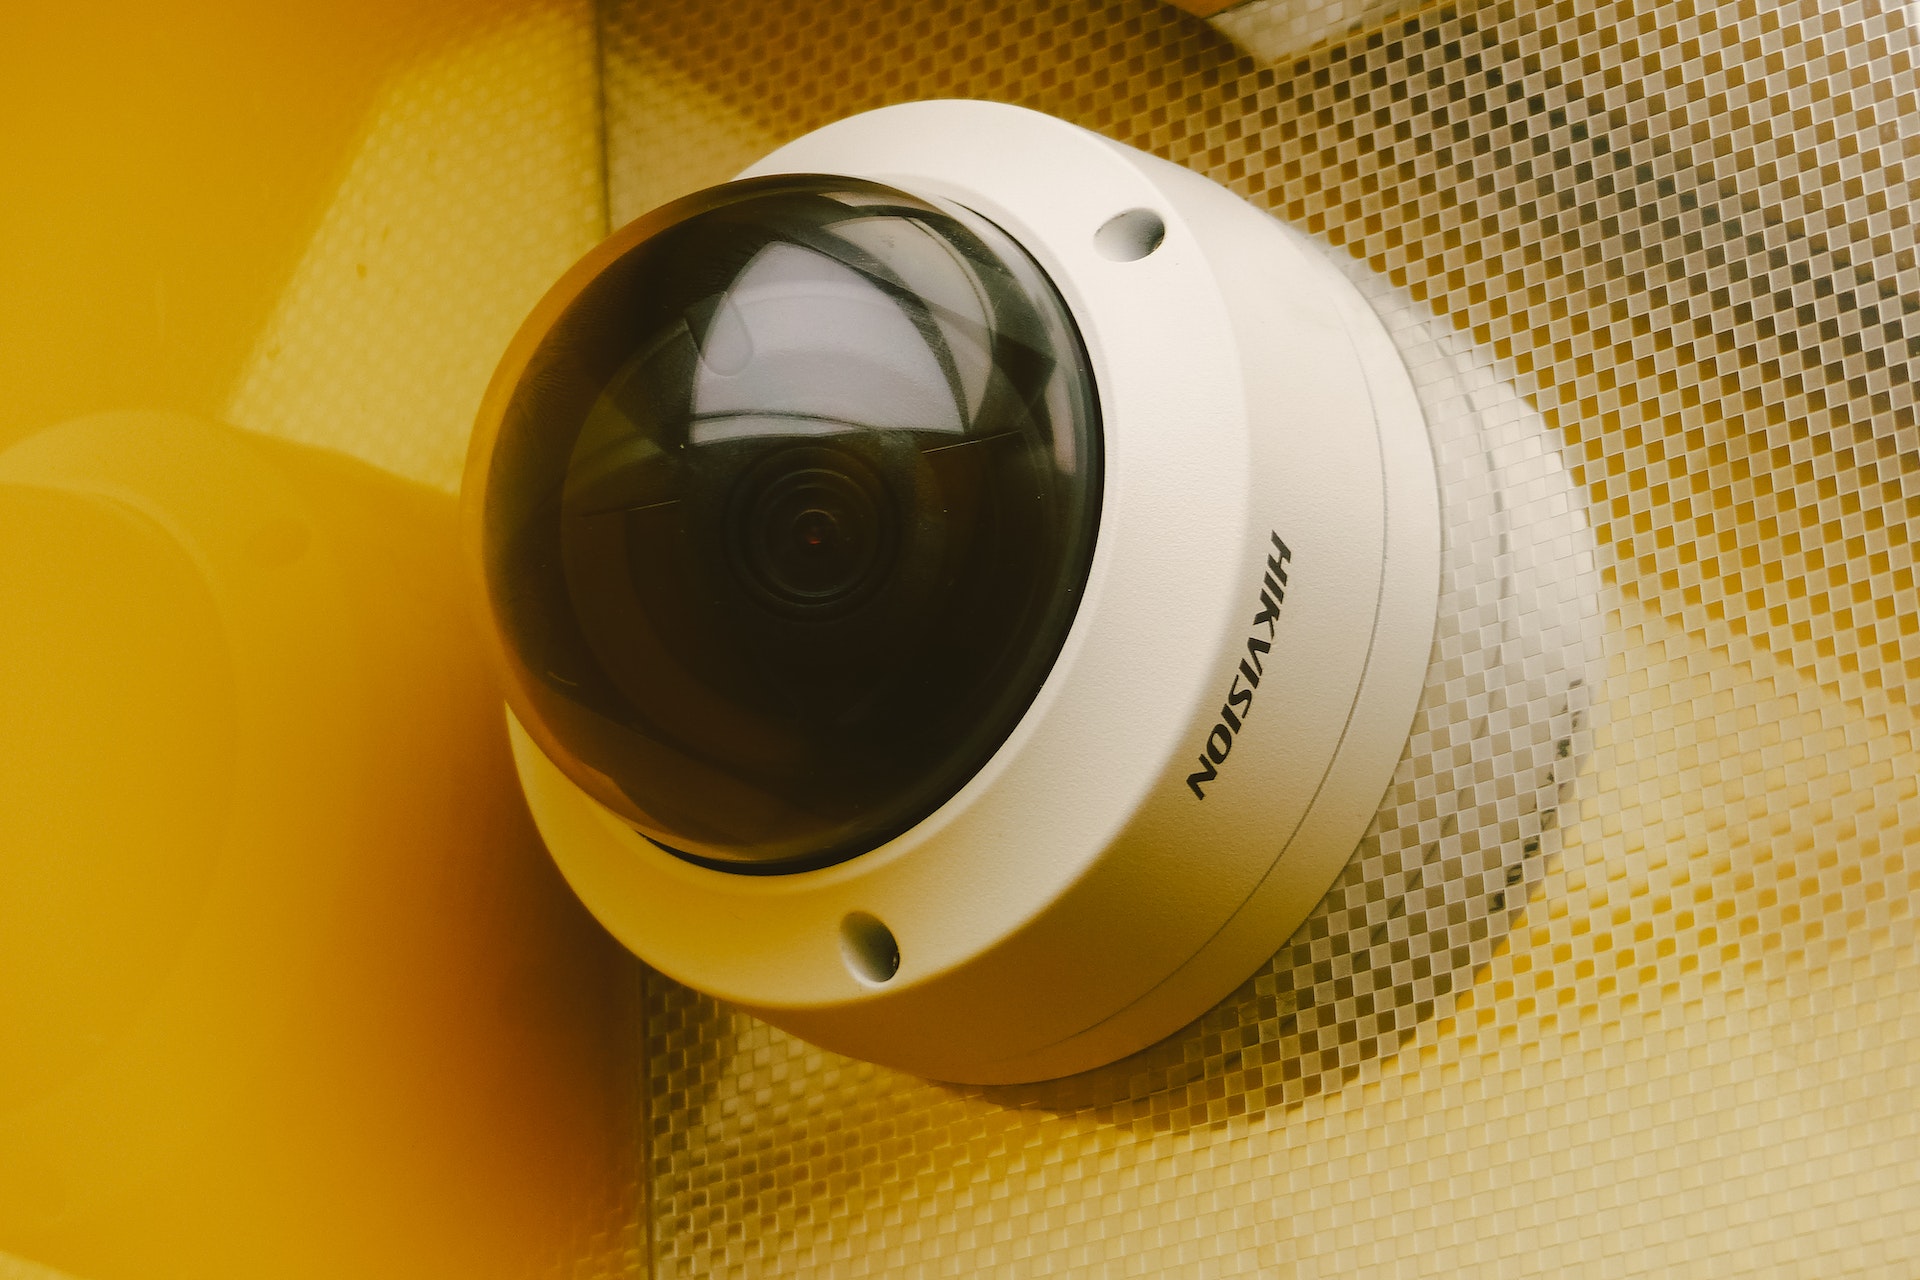 A small, round, discreet CCTV camera on a wall